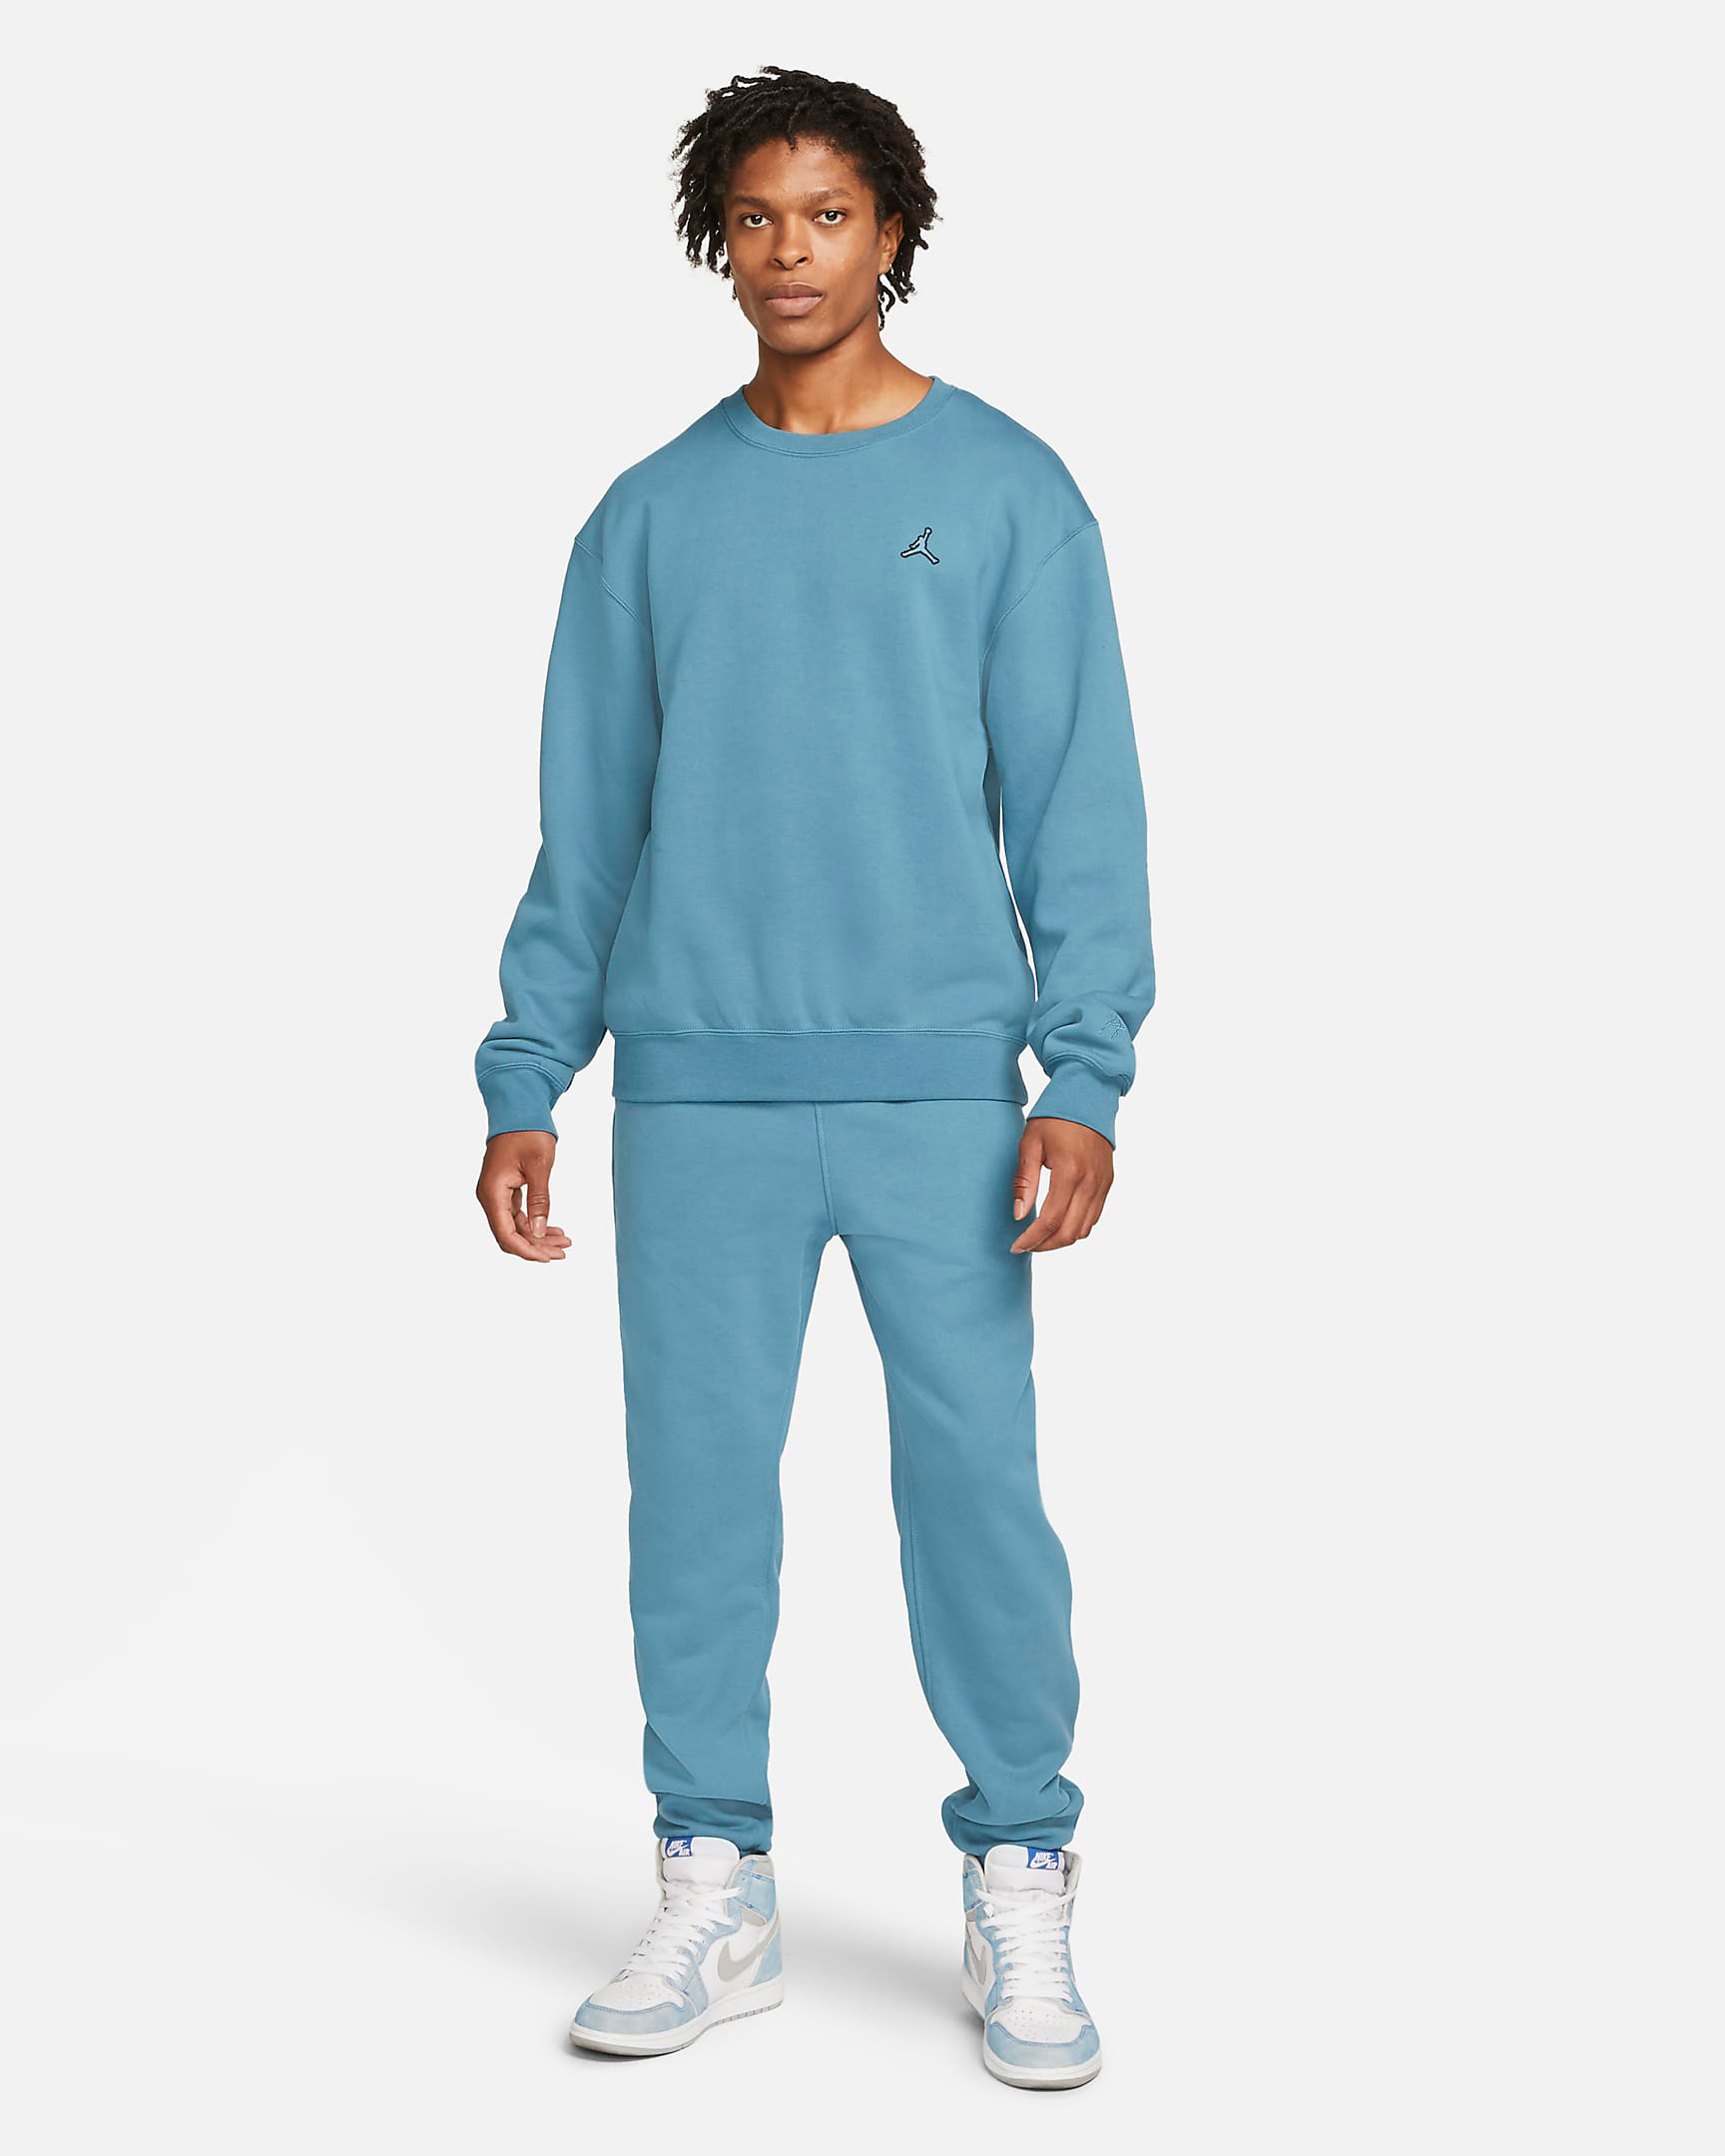 jordan-rift-blue-sweatshirt-pants-outfit